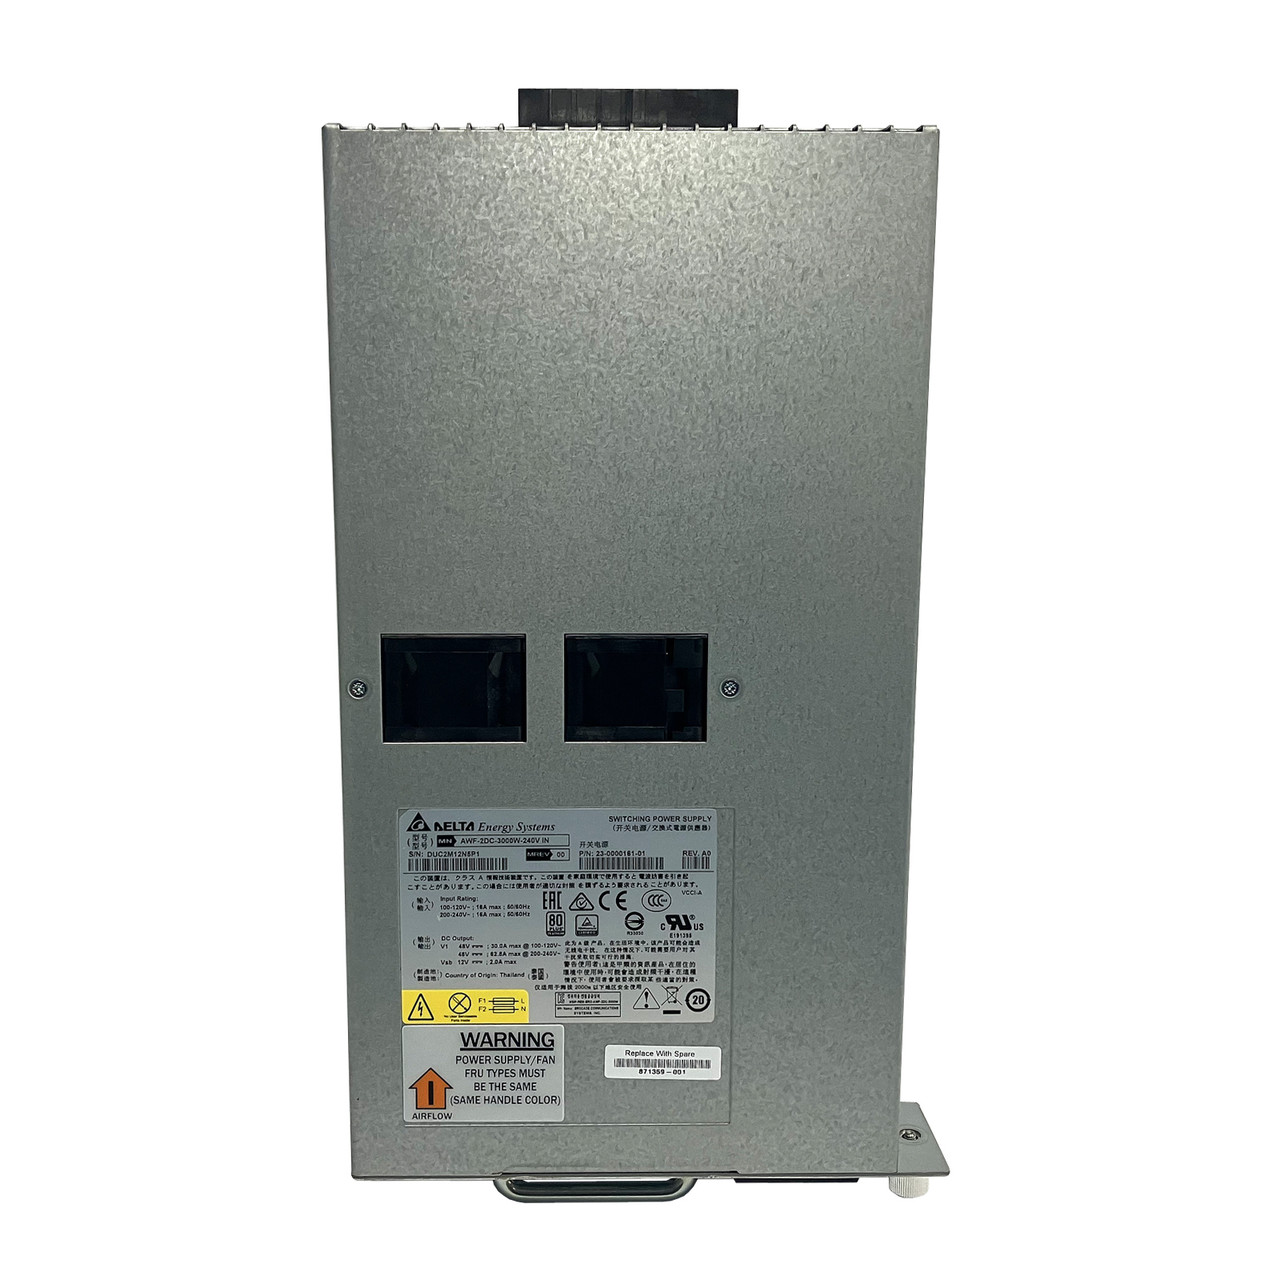 HPe 871359-001 3000W AC Power Supply P13290-001 23-0000161-01